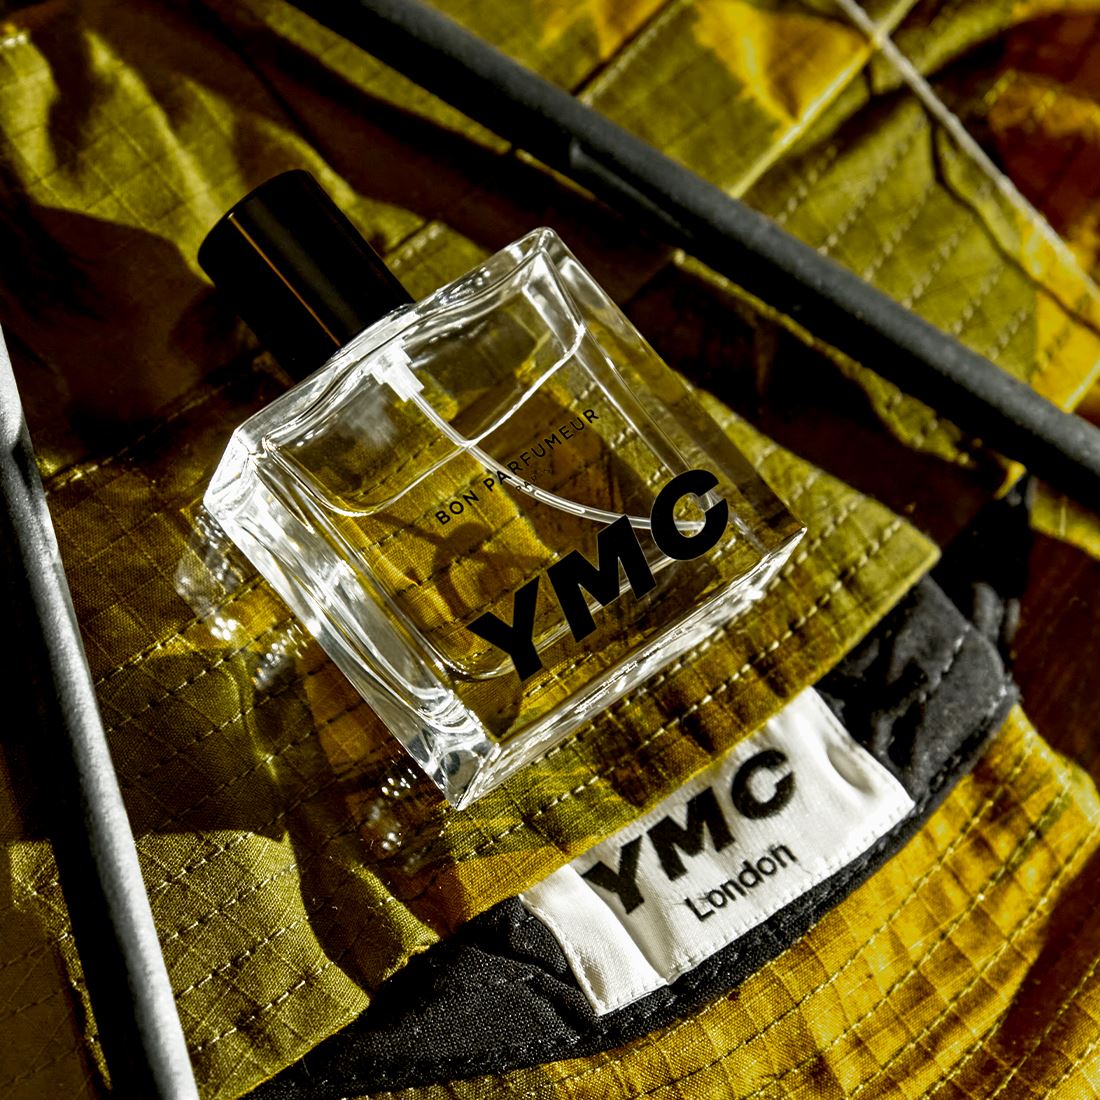 Eau de parfum 105 YMC with mandarin, cinnamon and sandalwood – Bon Parfumeur